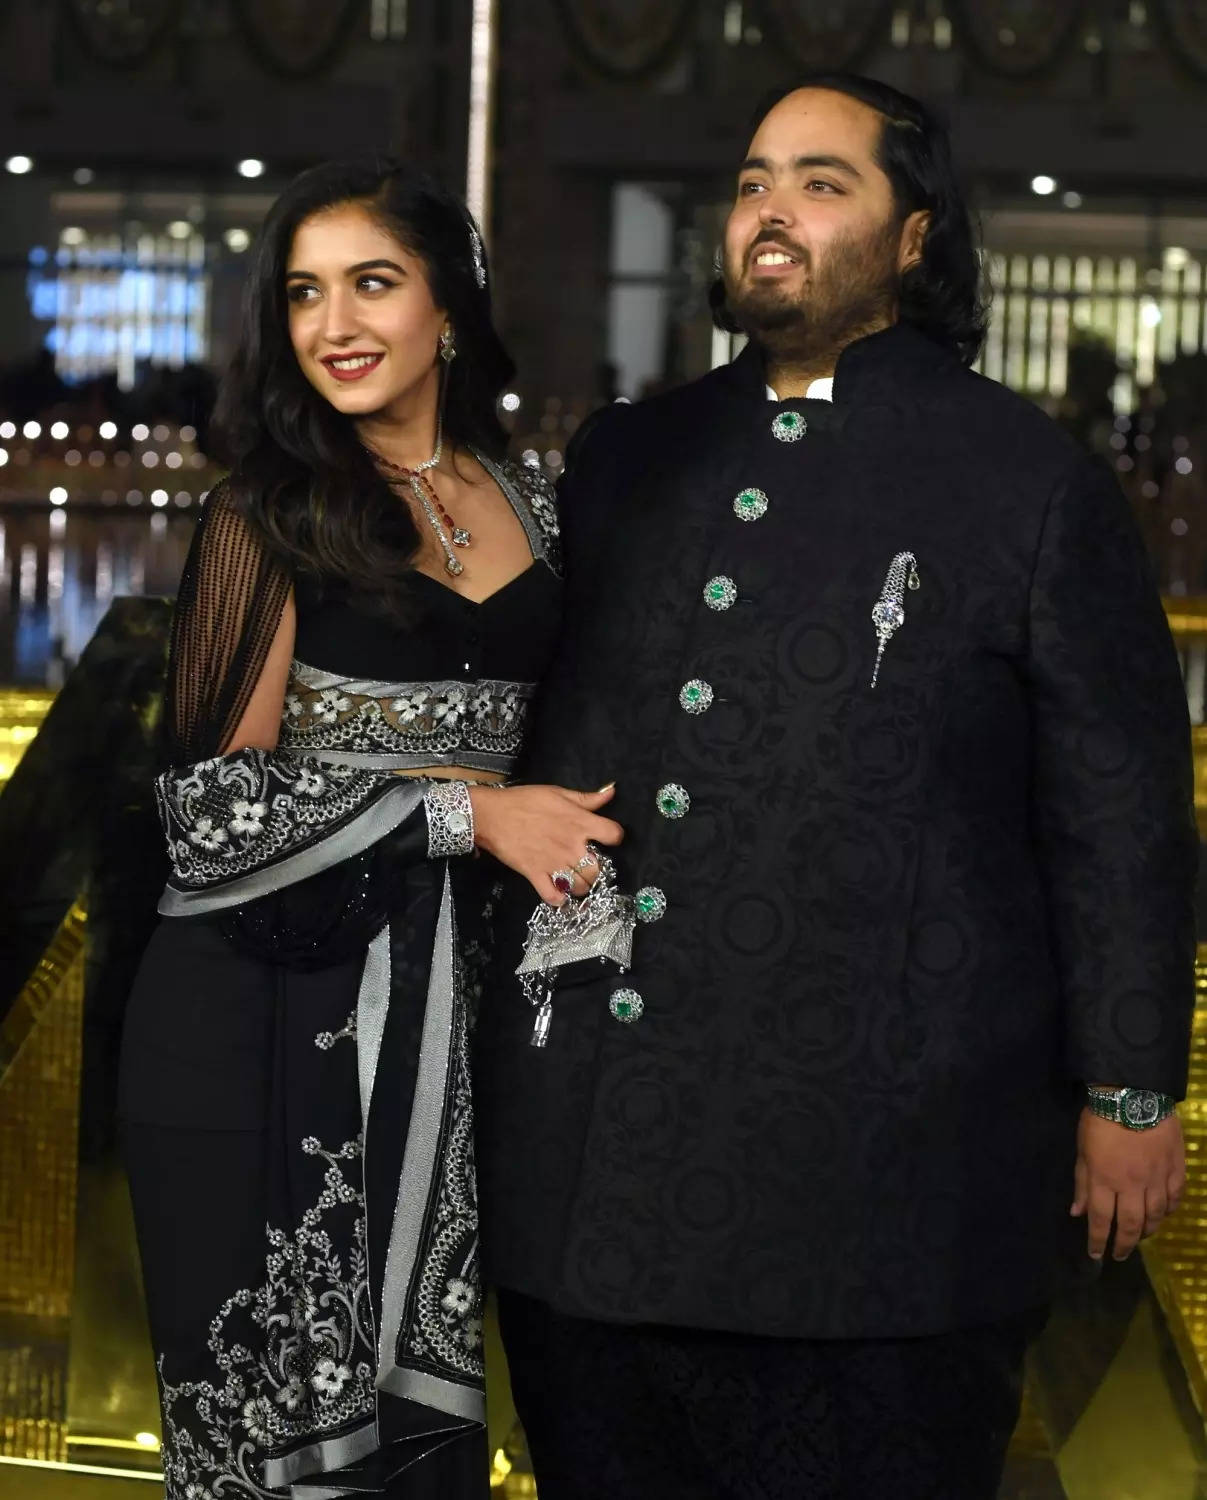 Buy Navy Blue Traditional Jodhpuri Suit for Men | Amogue